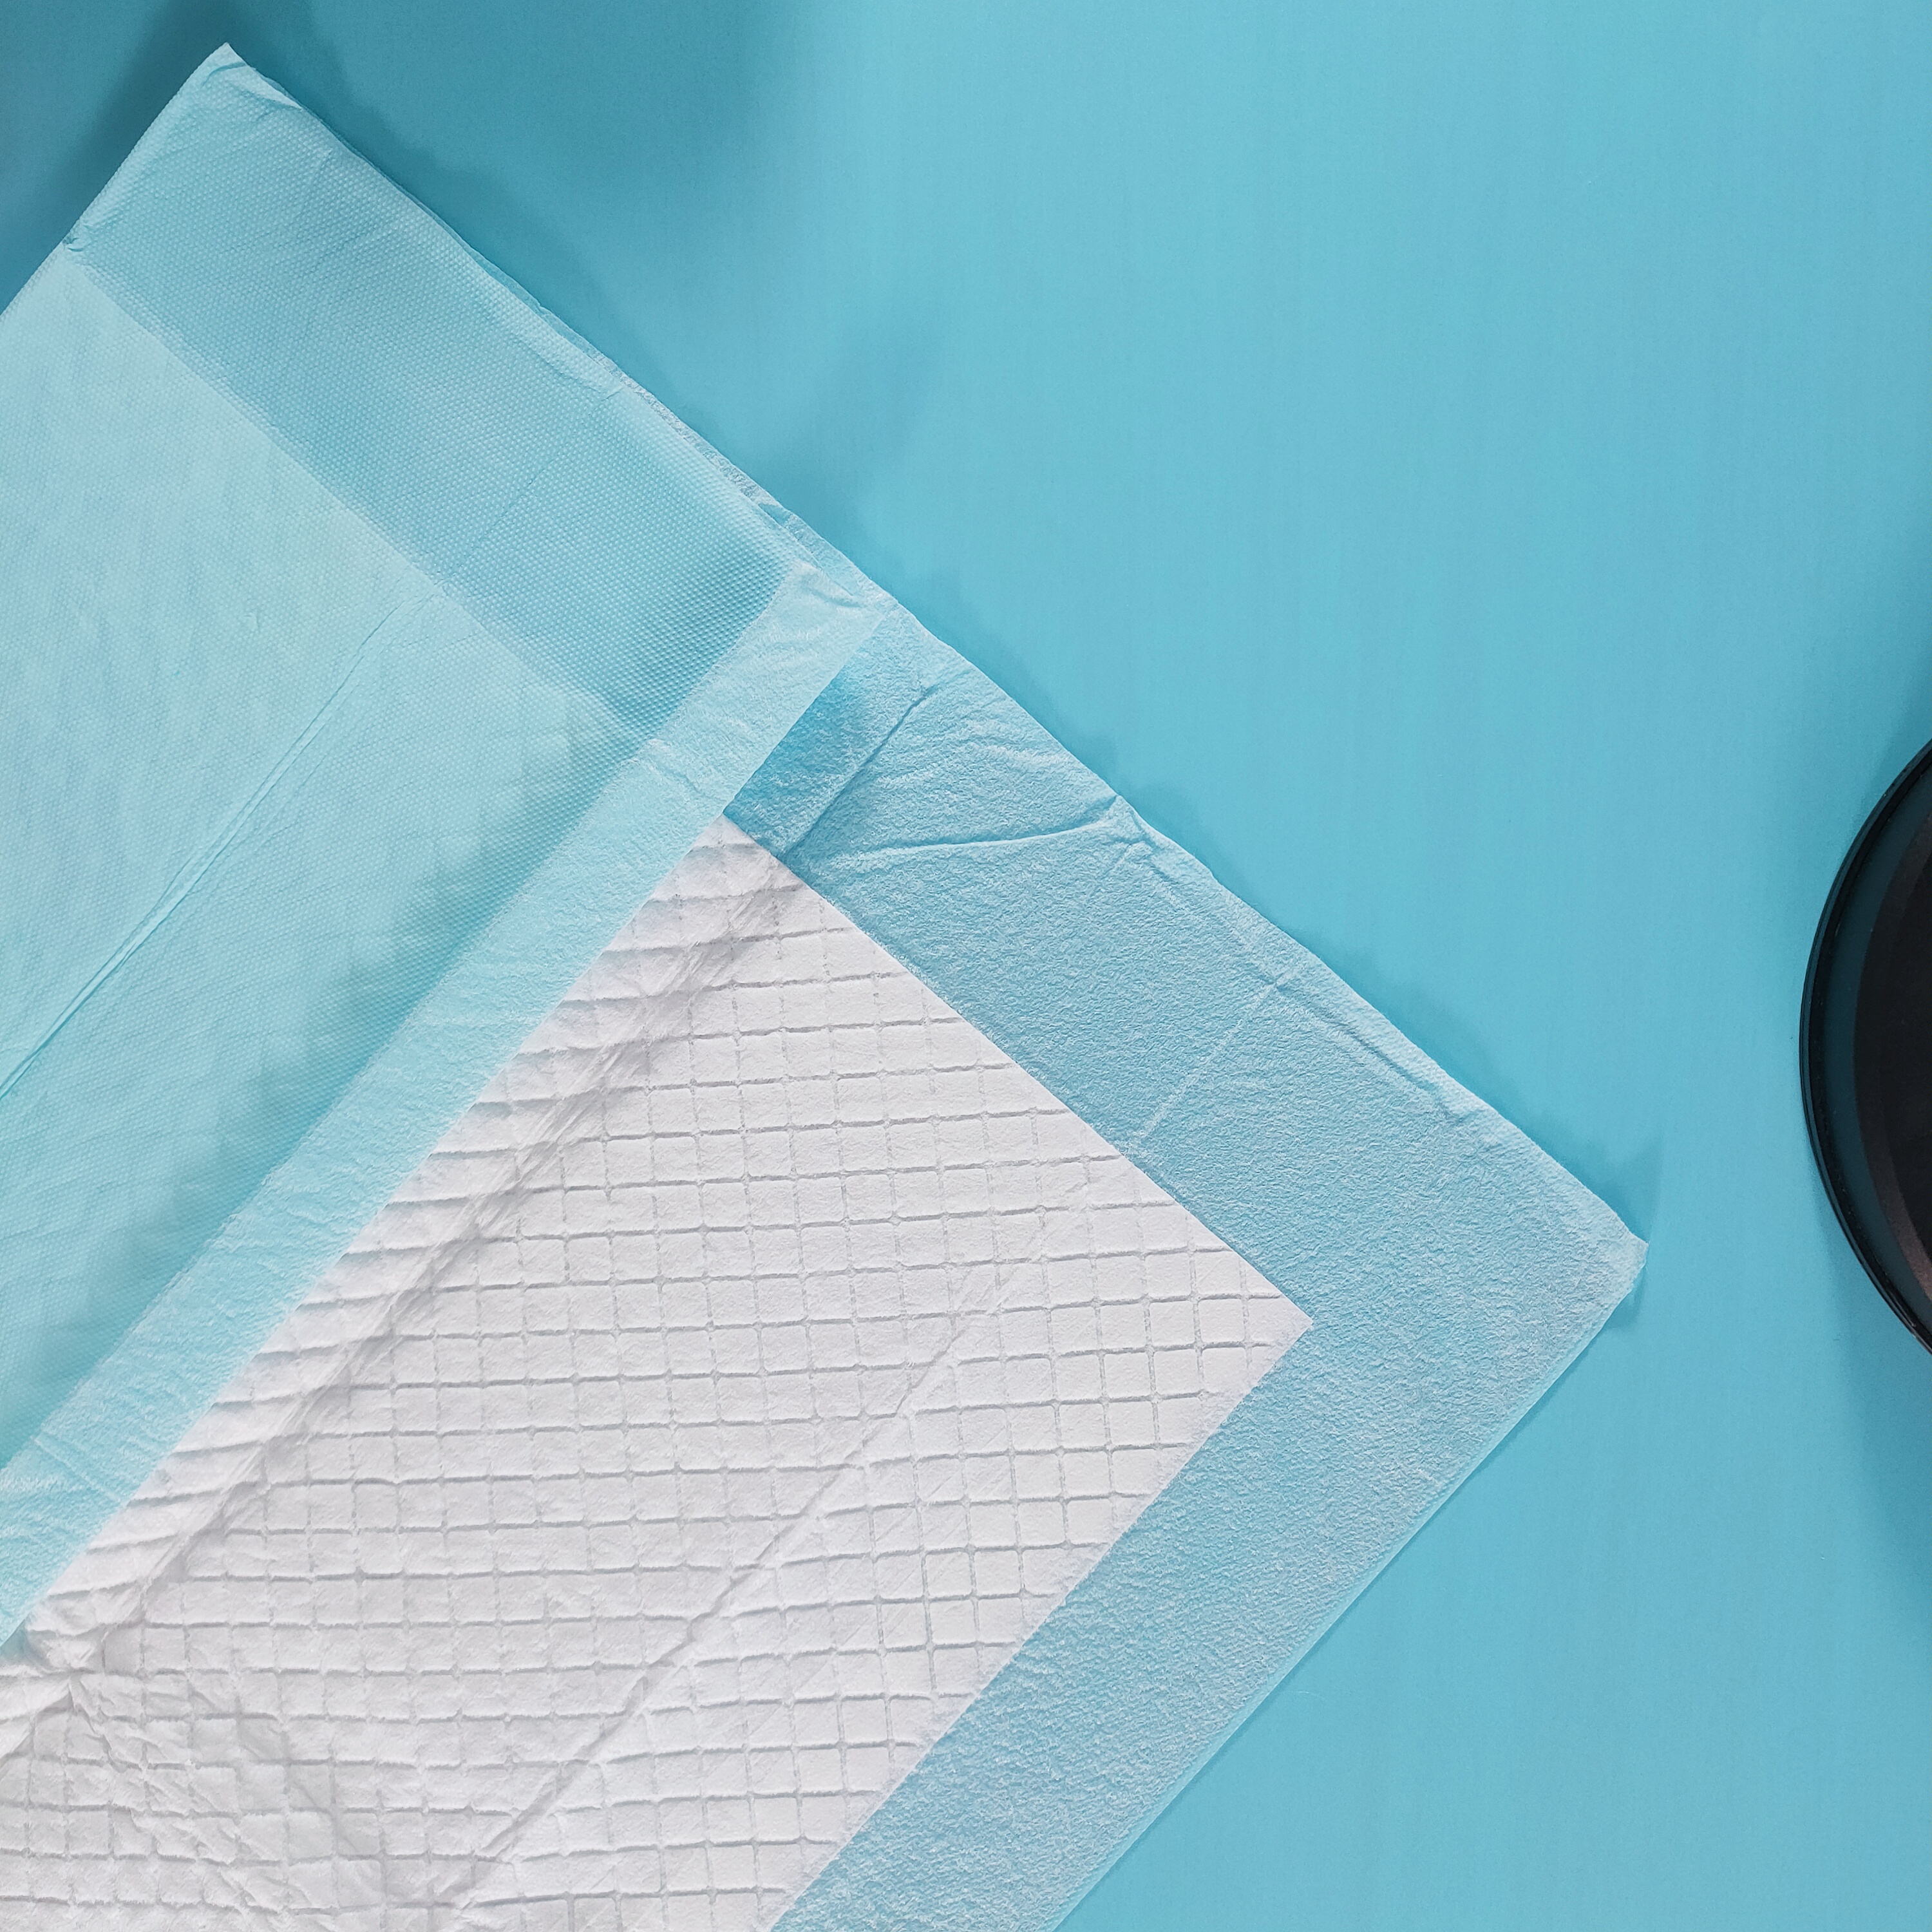 Almohadillas súper absorbentes de 60x90cm, pañales para adultos, almohadilla inferior desechable para ancianos con incontinencia, hogar de ancianos